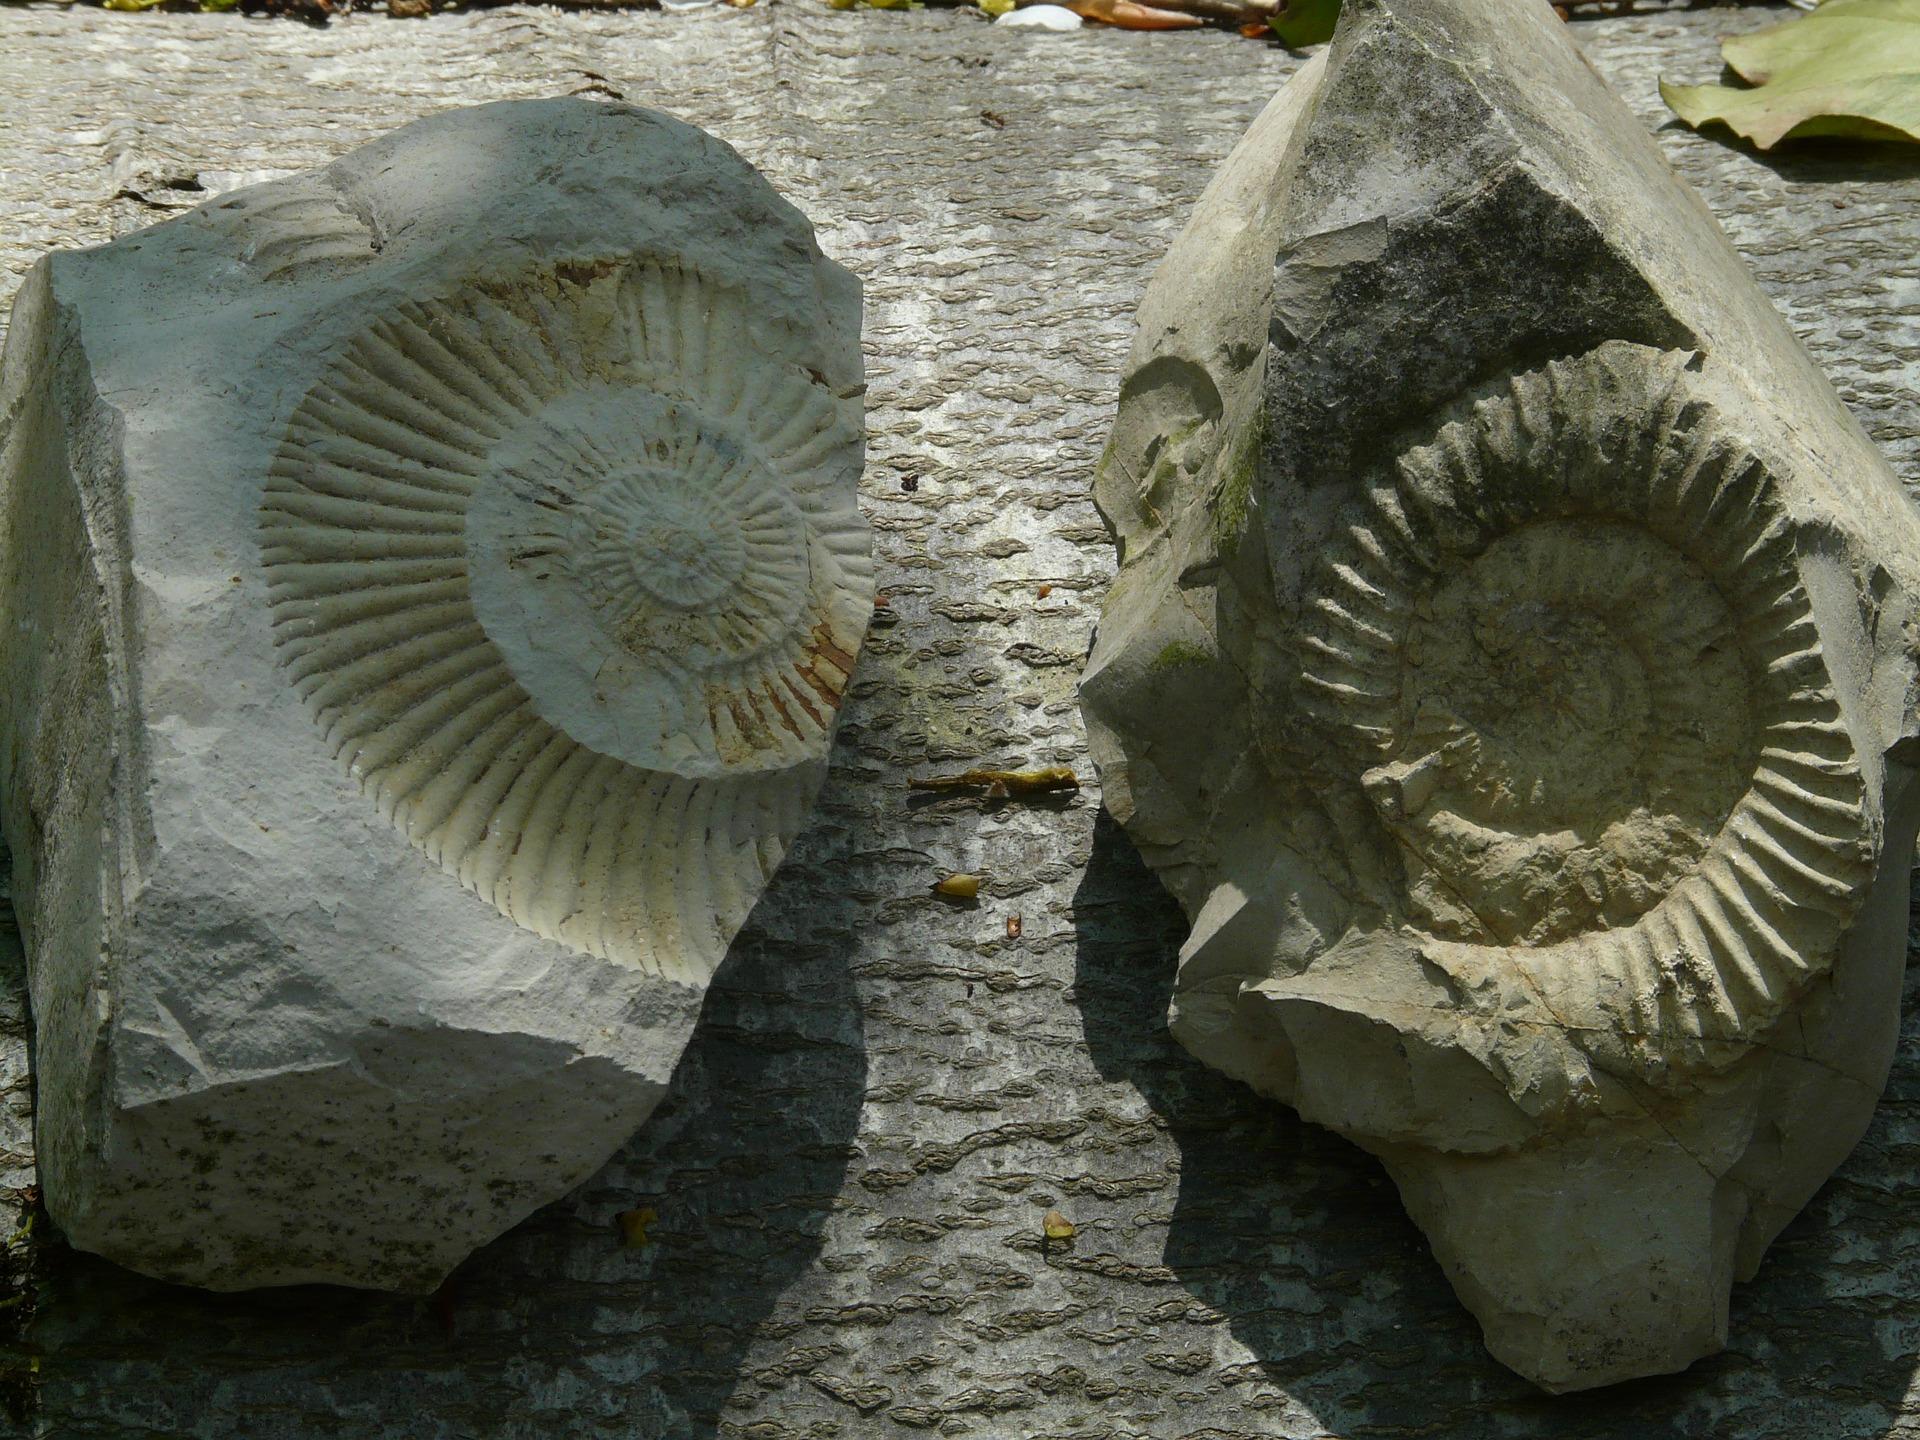 Fossils gffc5eb05b 1920